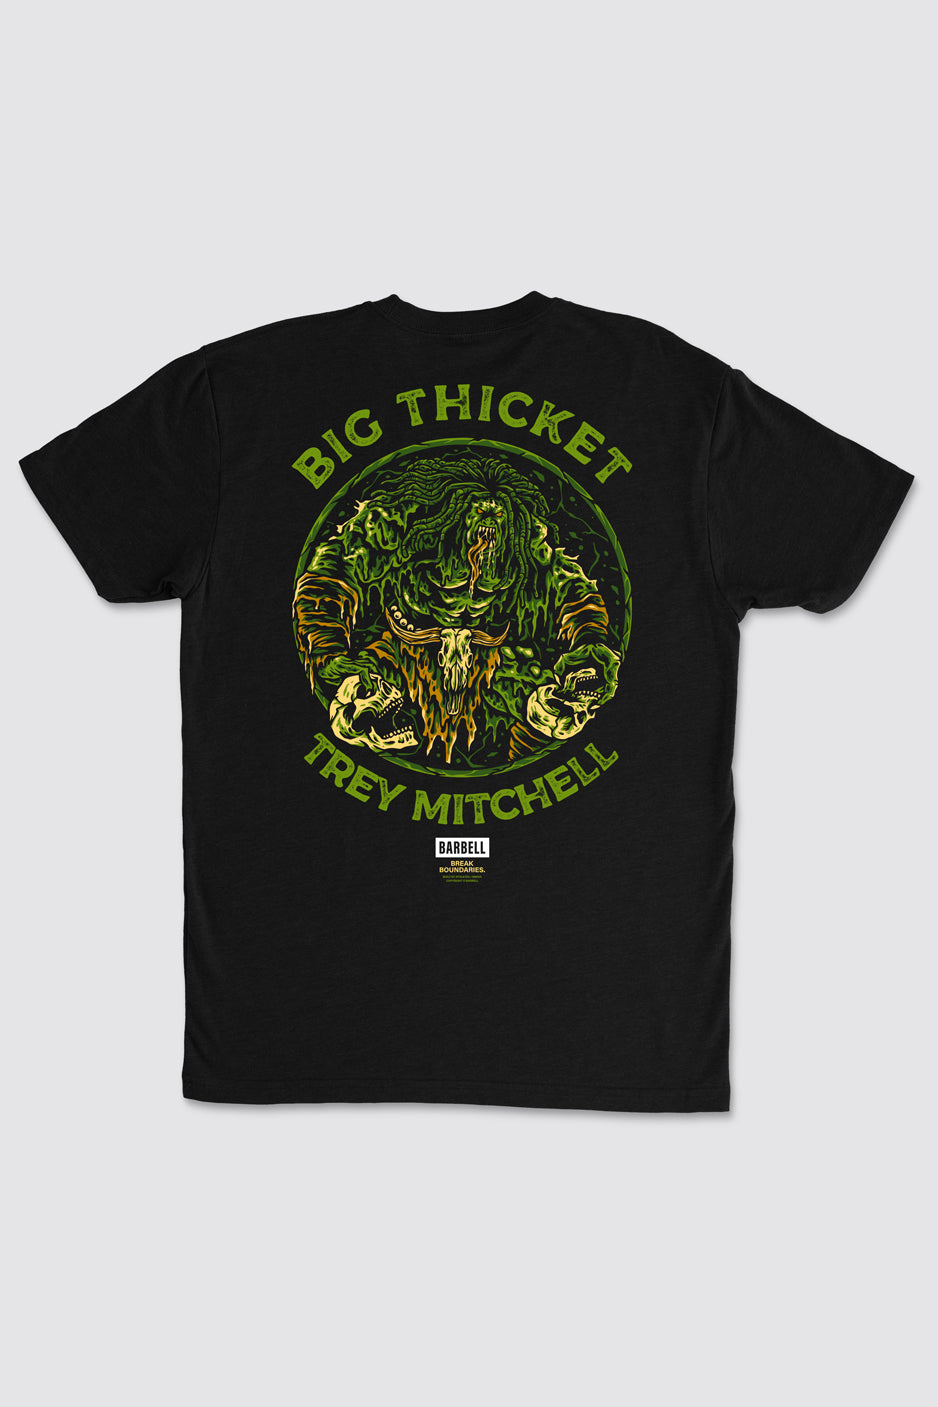 Mitchell Swamp Monster Tee